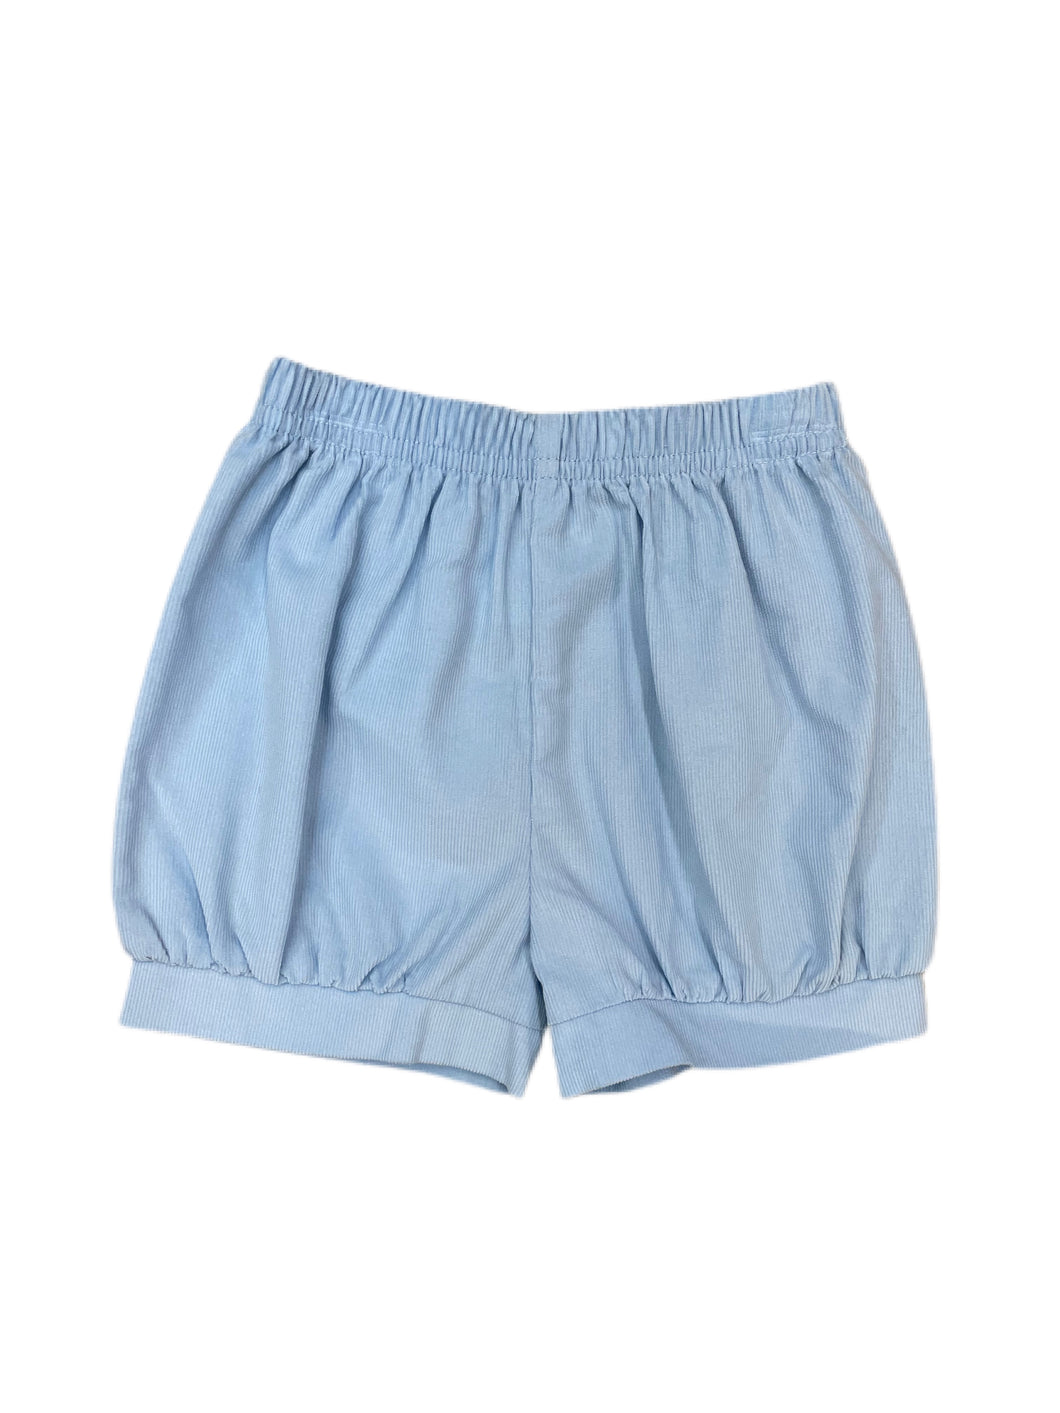 Zuccini Light Blue Corduroy Banded Shorts